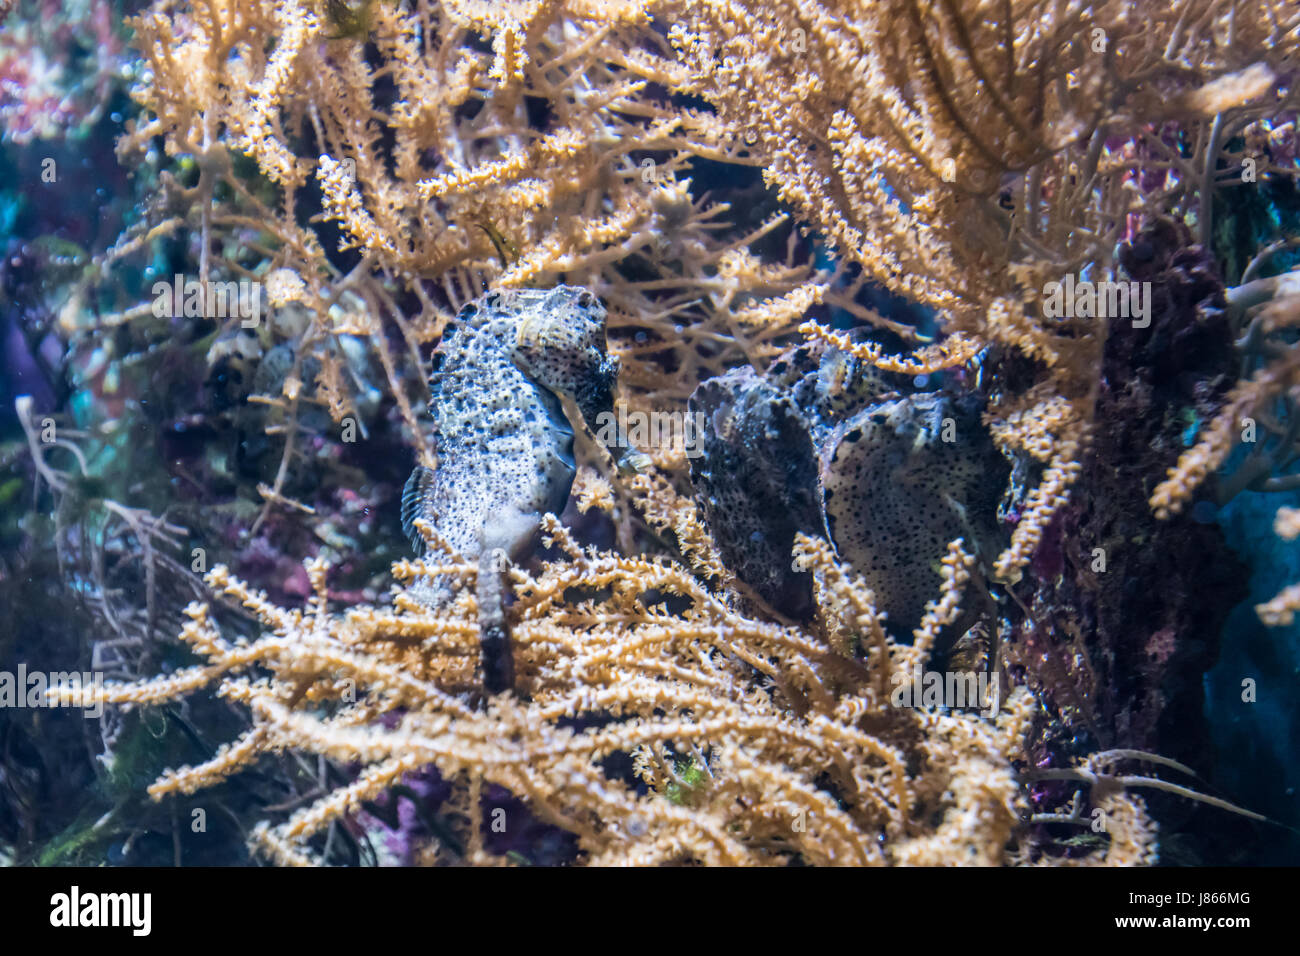 Group of seahorses sleeping in water plants Stock Photo